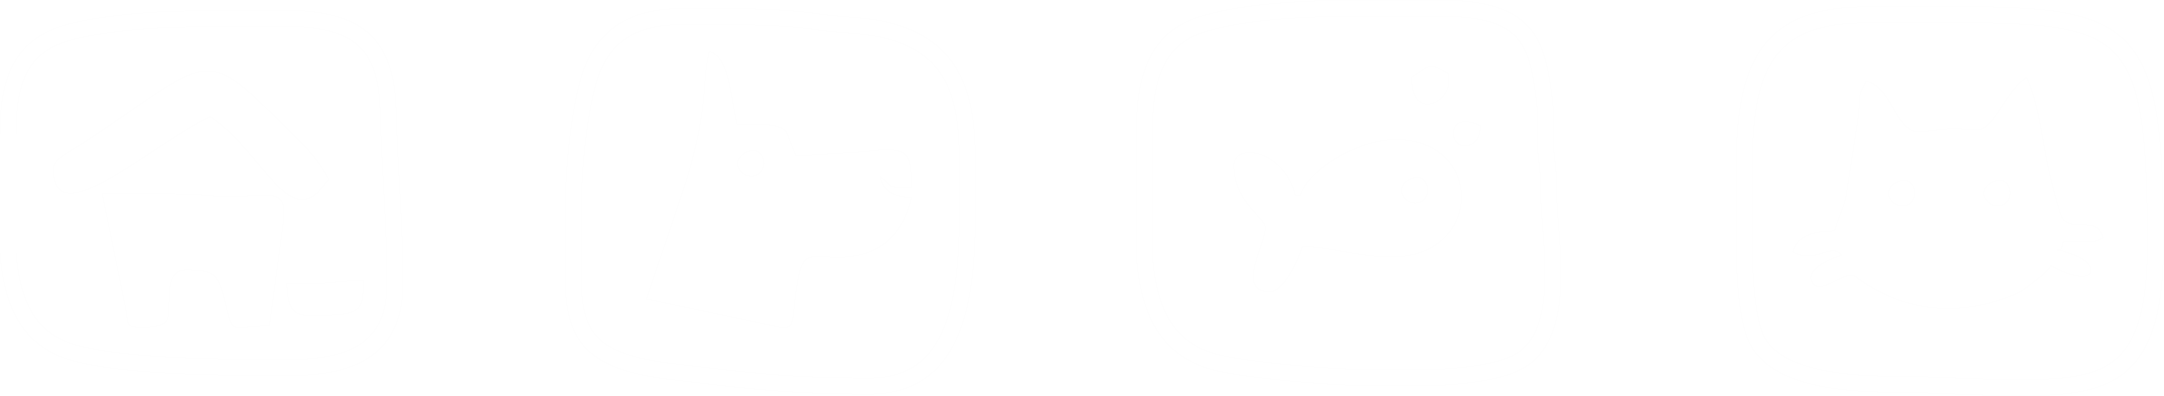 icones trevo distribuidora